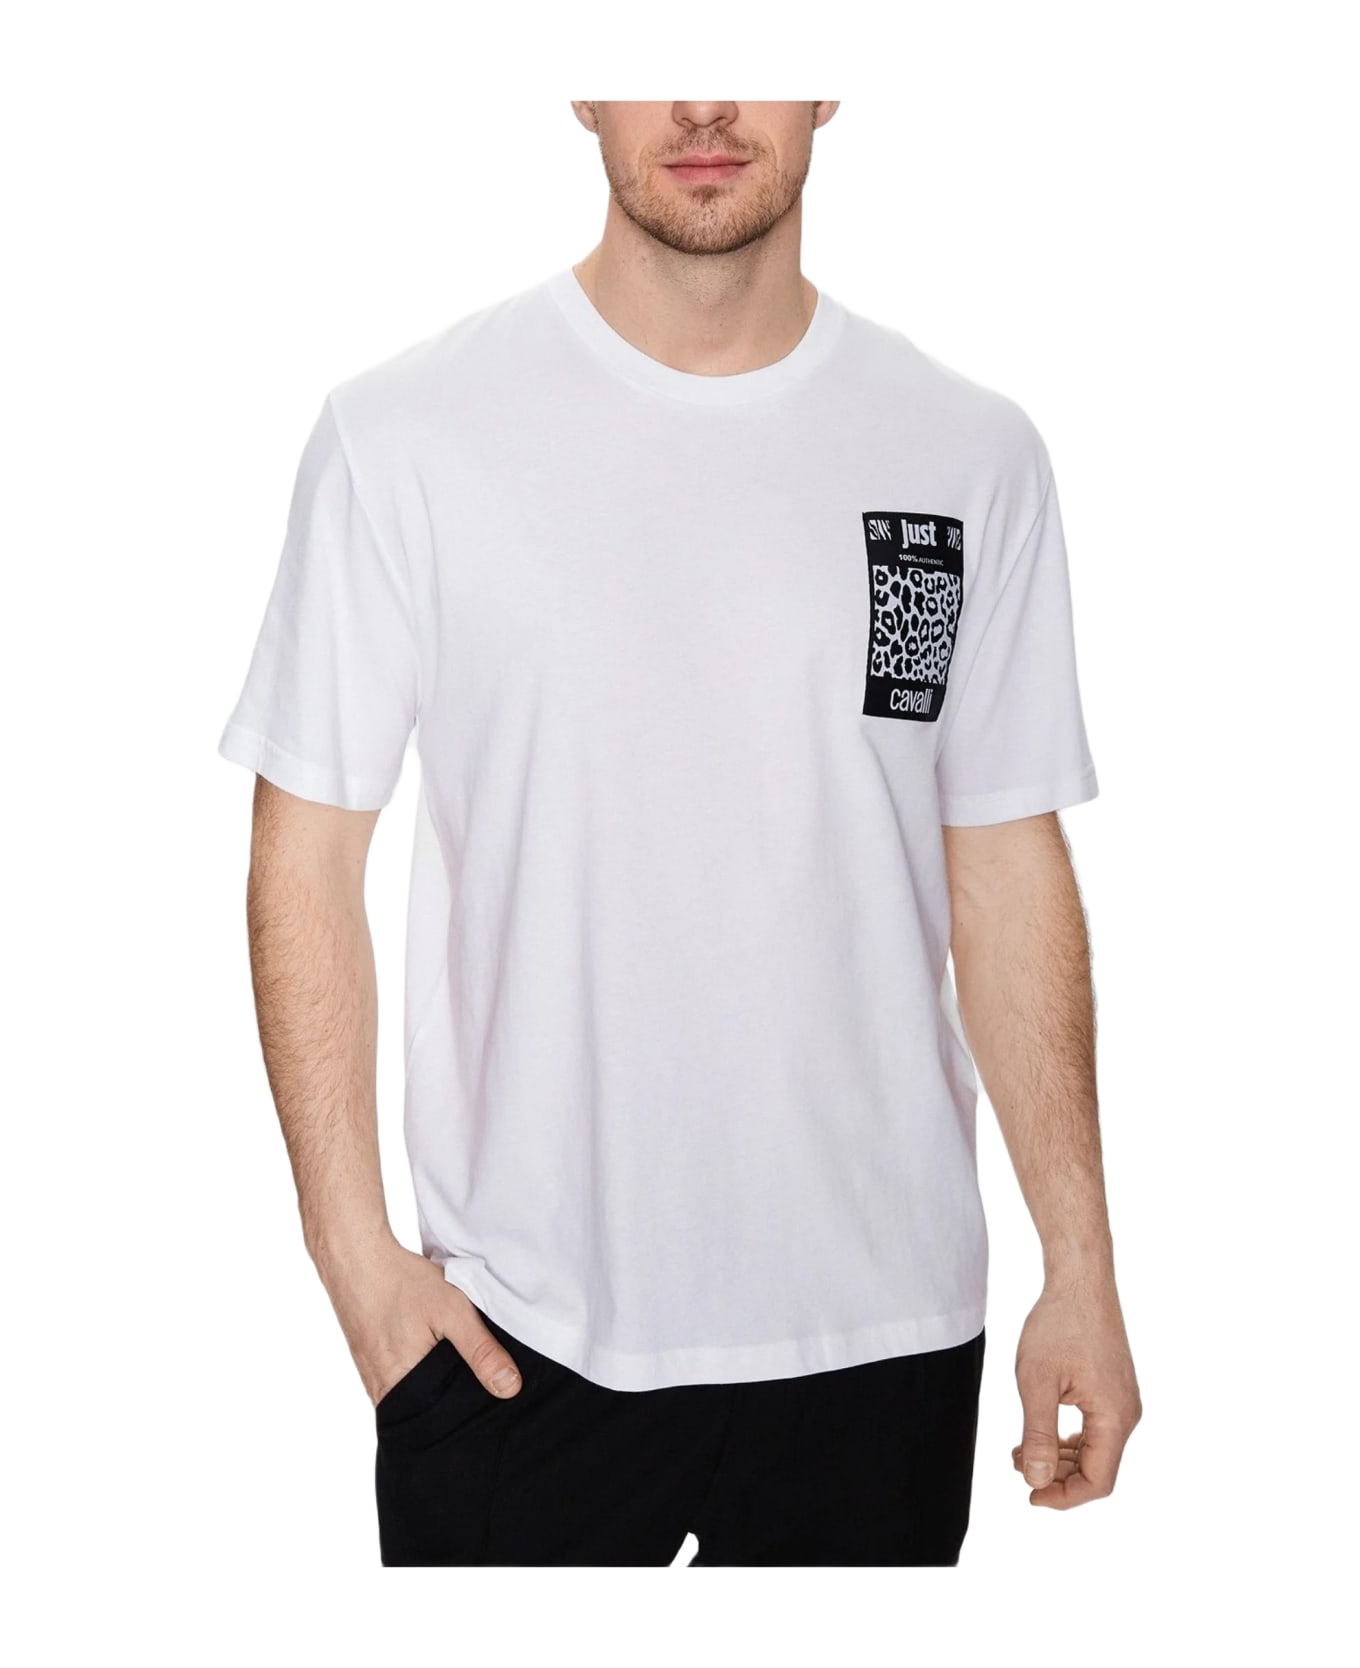 Just Cavalli T-shirt - White シャツ